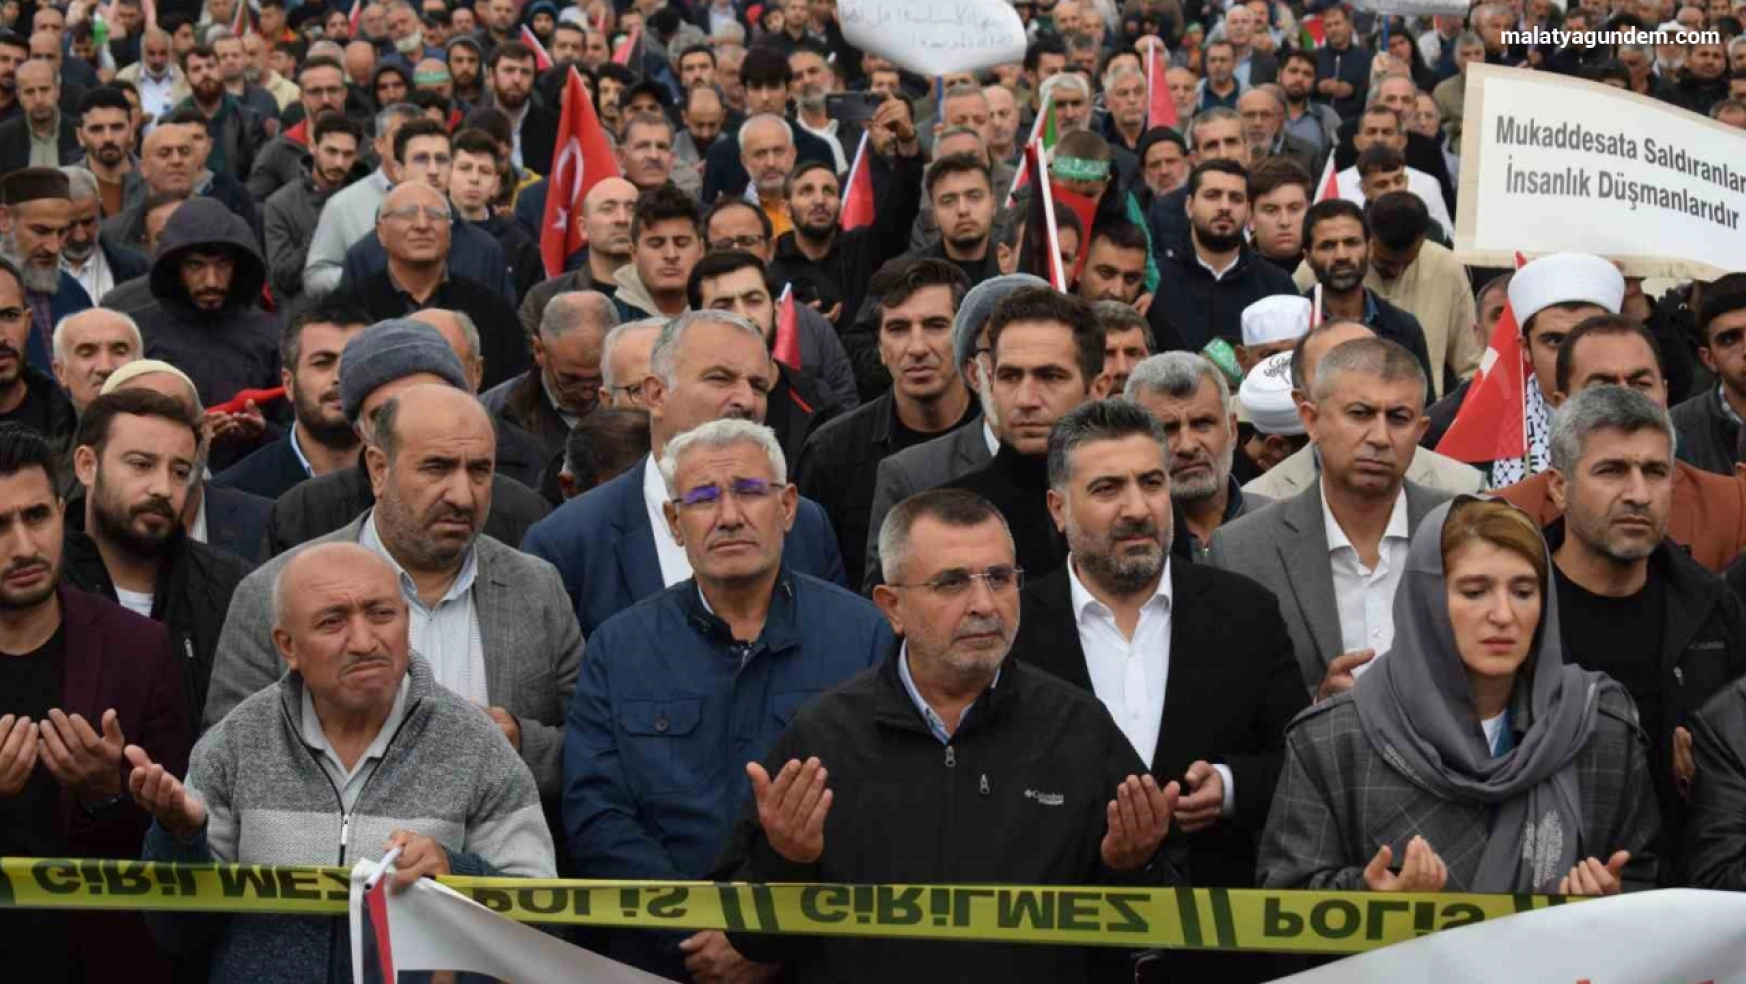 Malatya'da Filistin'e destek mitingi